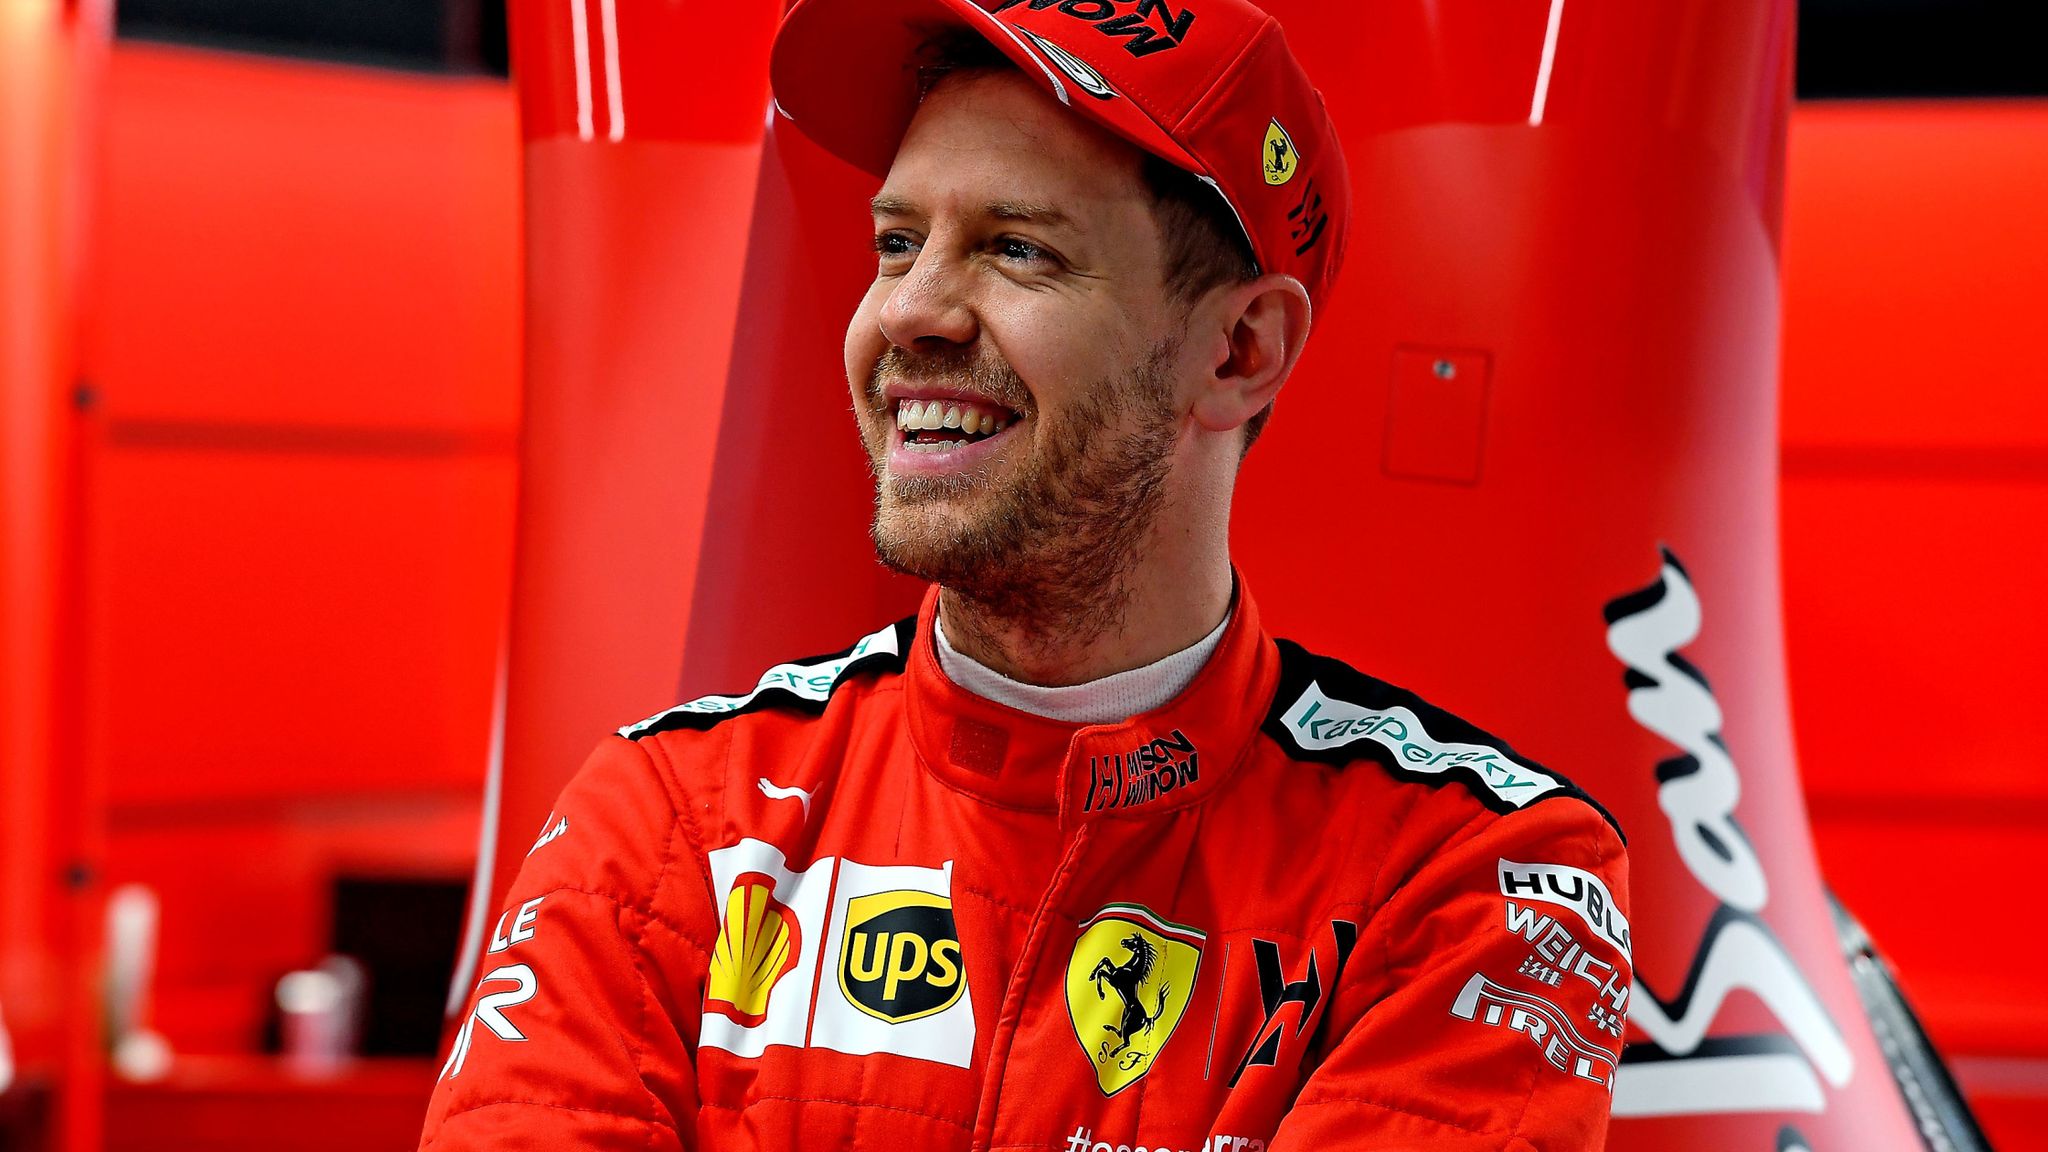 Sebastian Vettel to join Aston Martin for 2021 F1 Season replacing Sergio Perez